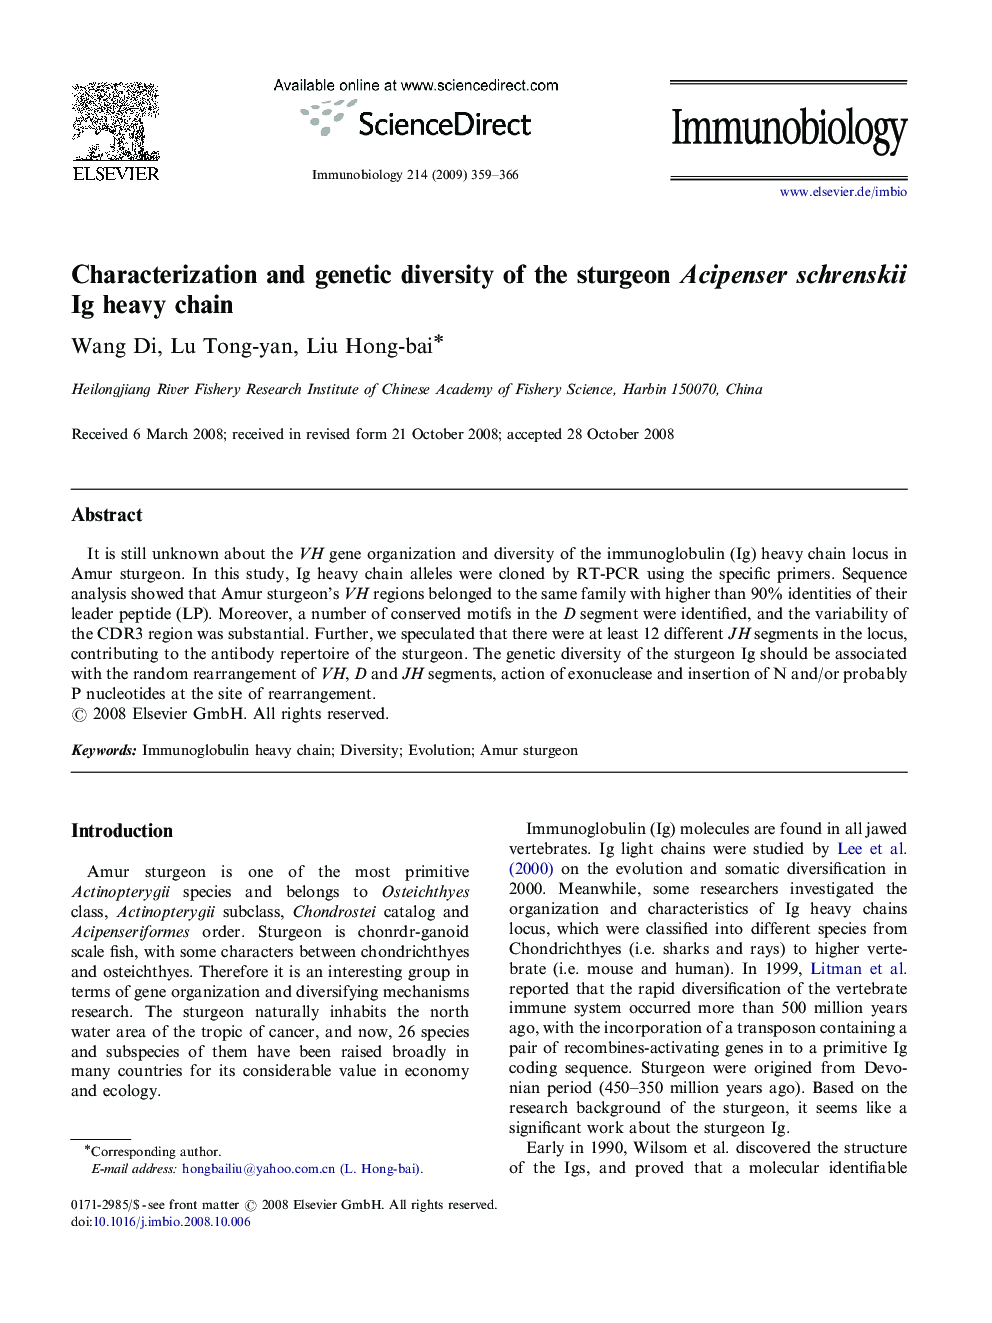 Characterization and genetic diversity of the sturgeon Acipenser schrenskii Ig heavy chain